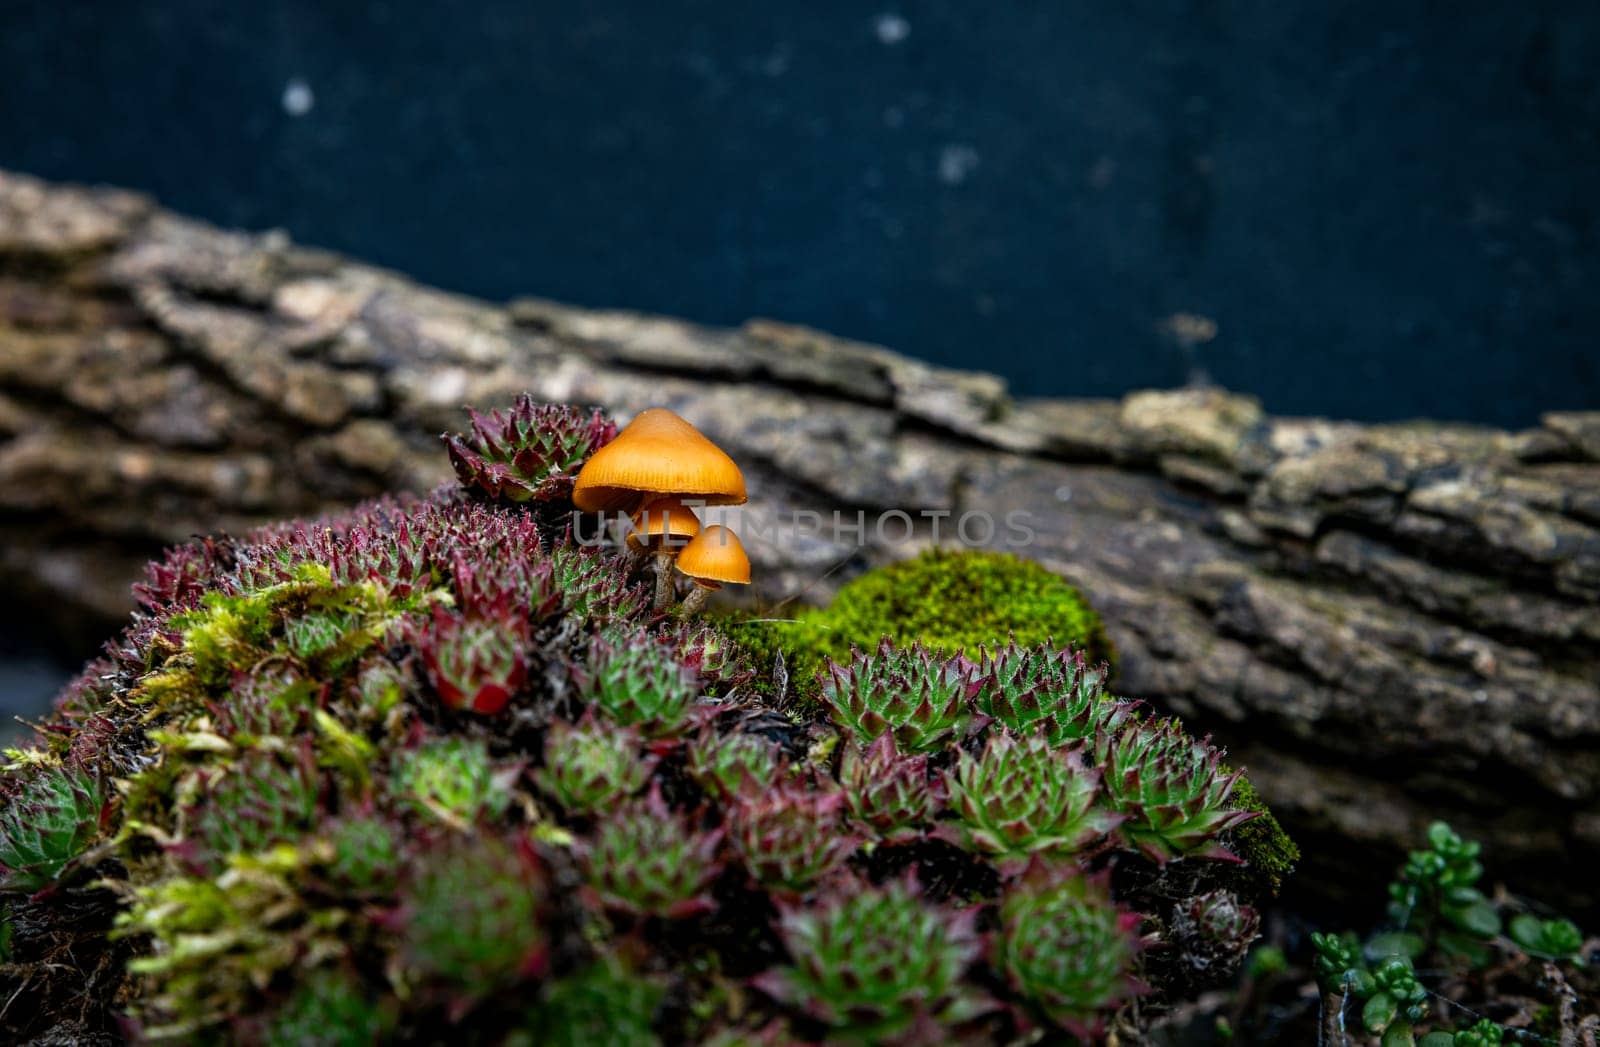 miniature mushroom in the garden by compuinfoto